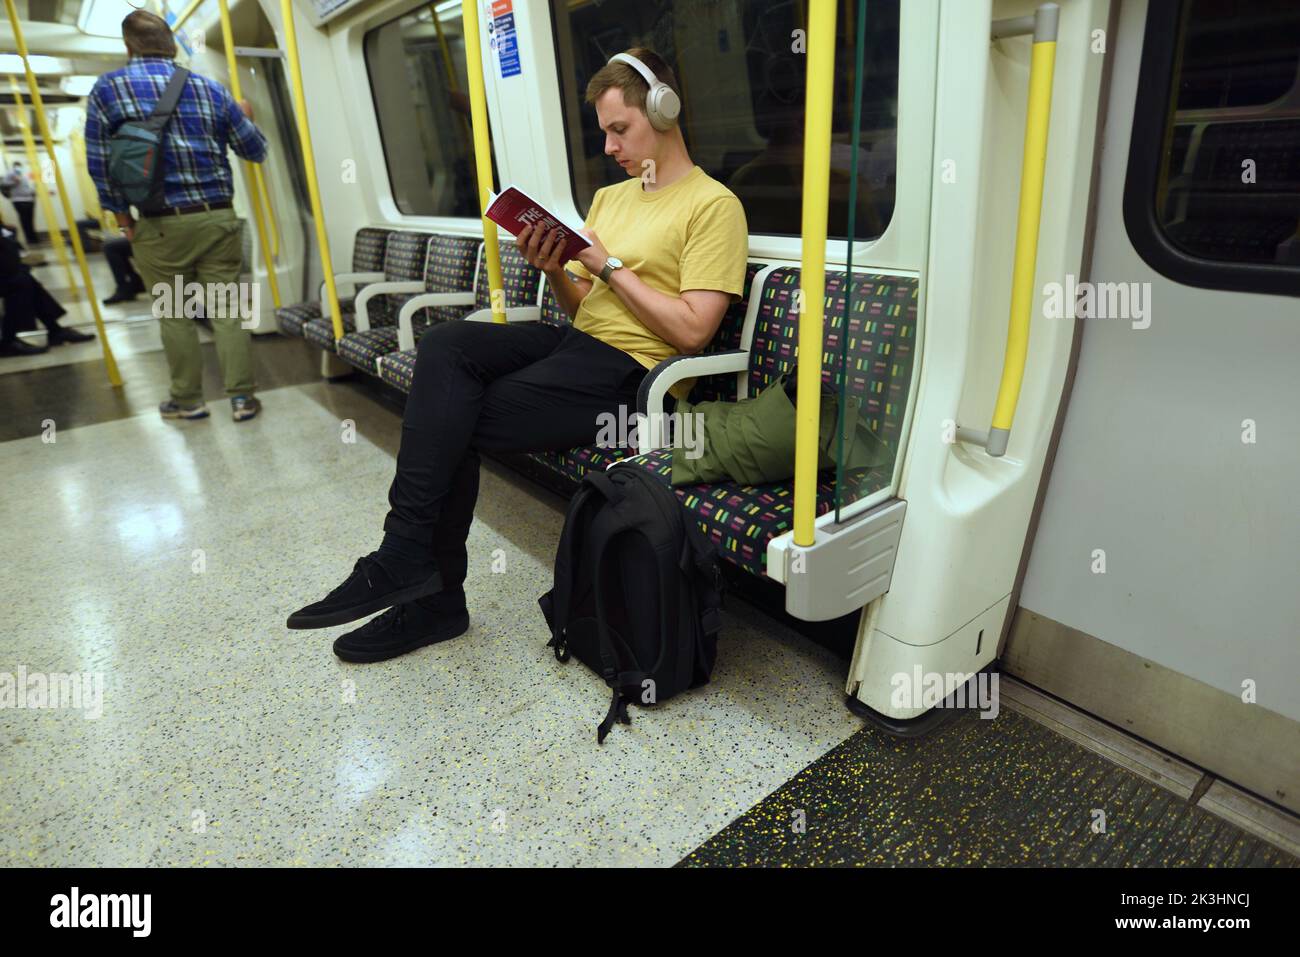 London, England, UK. Man reading a book on the tube, wearing headphones Stock Photo